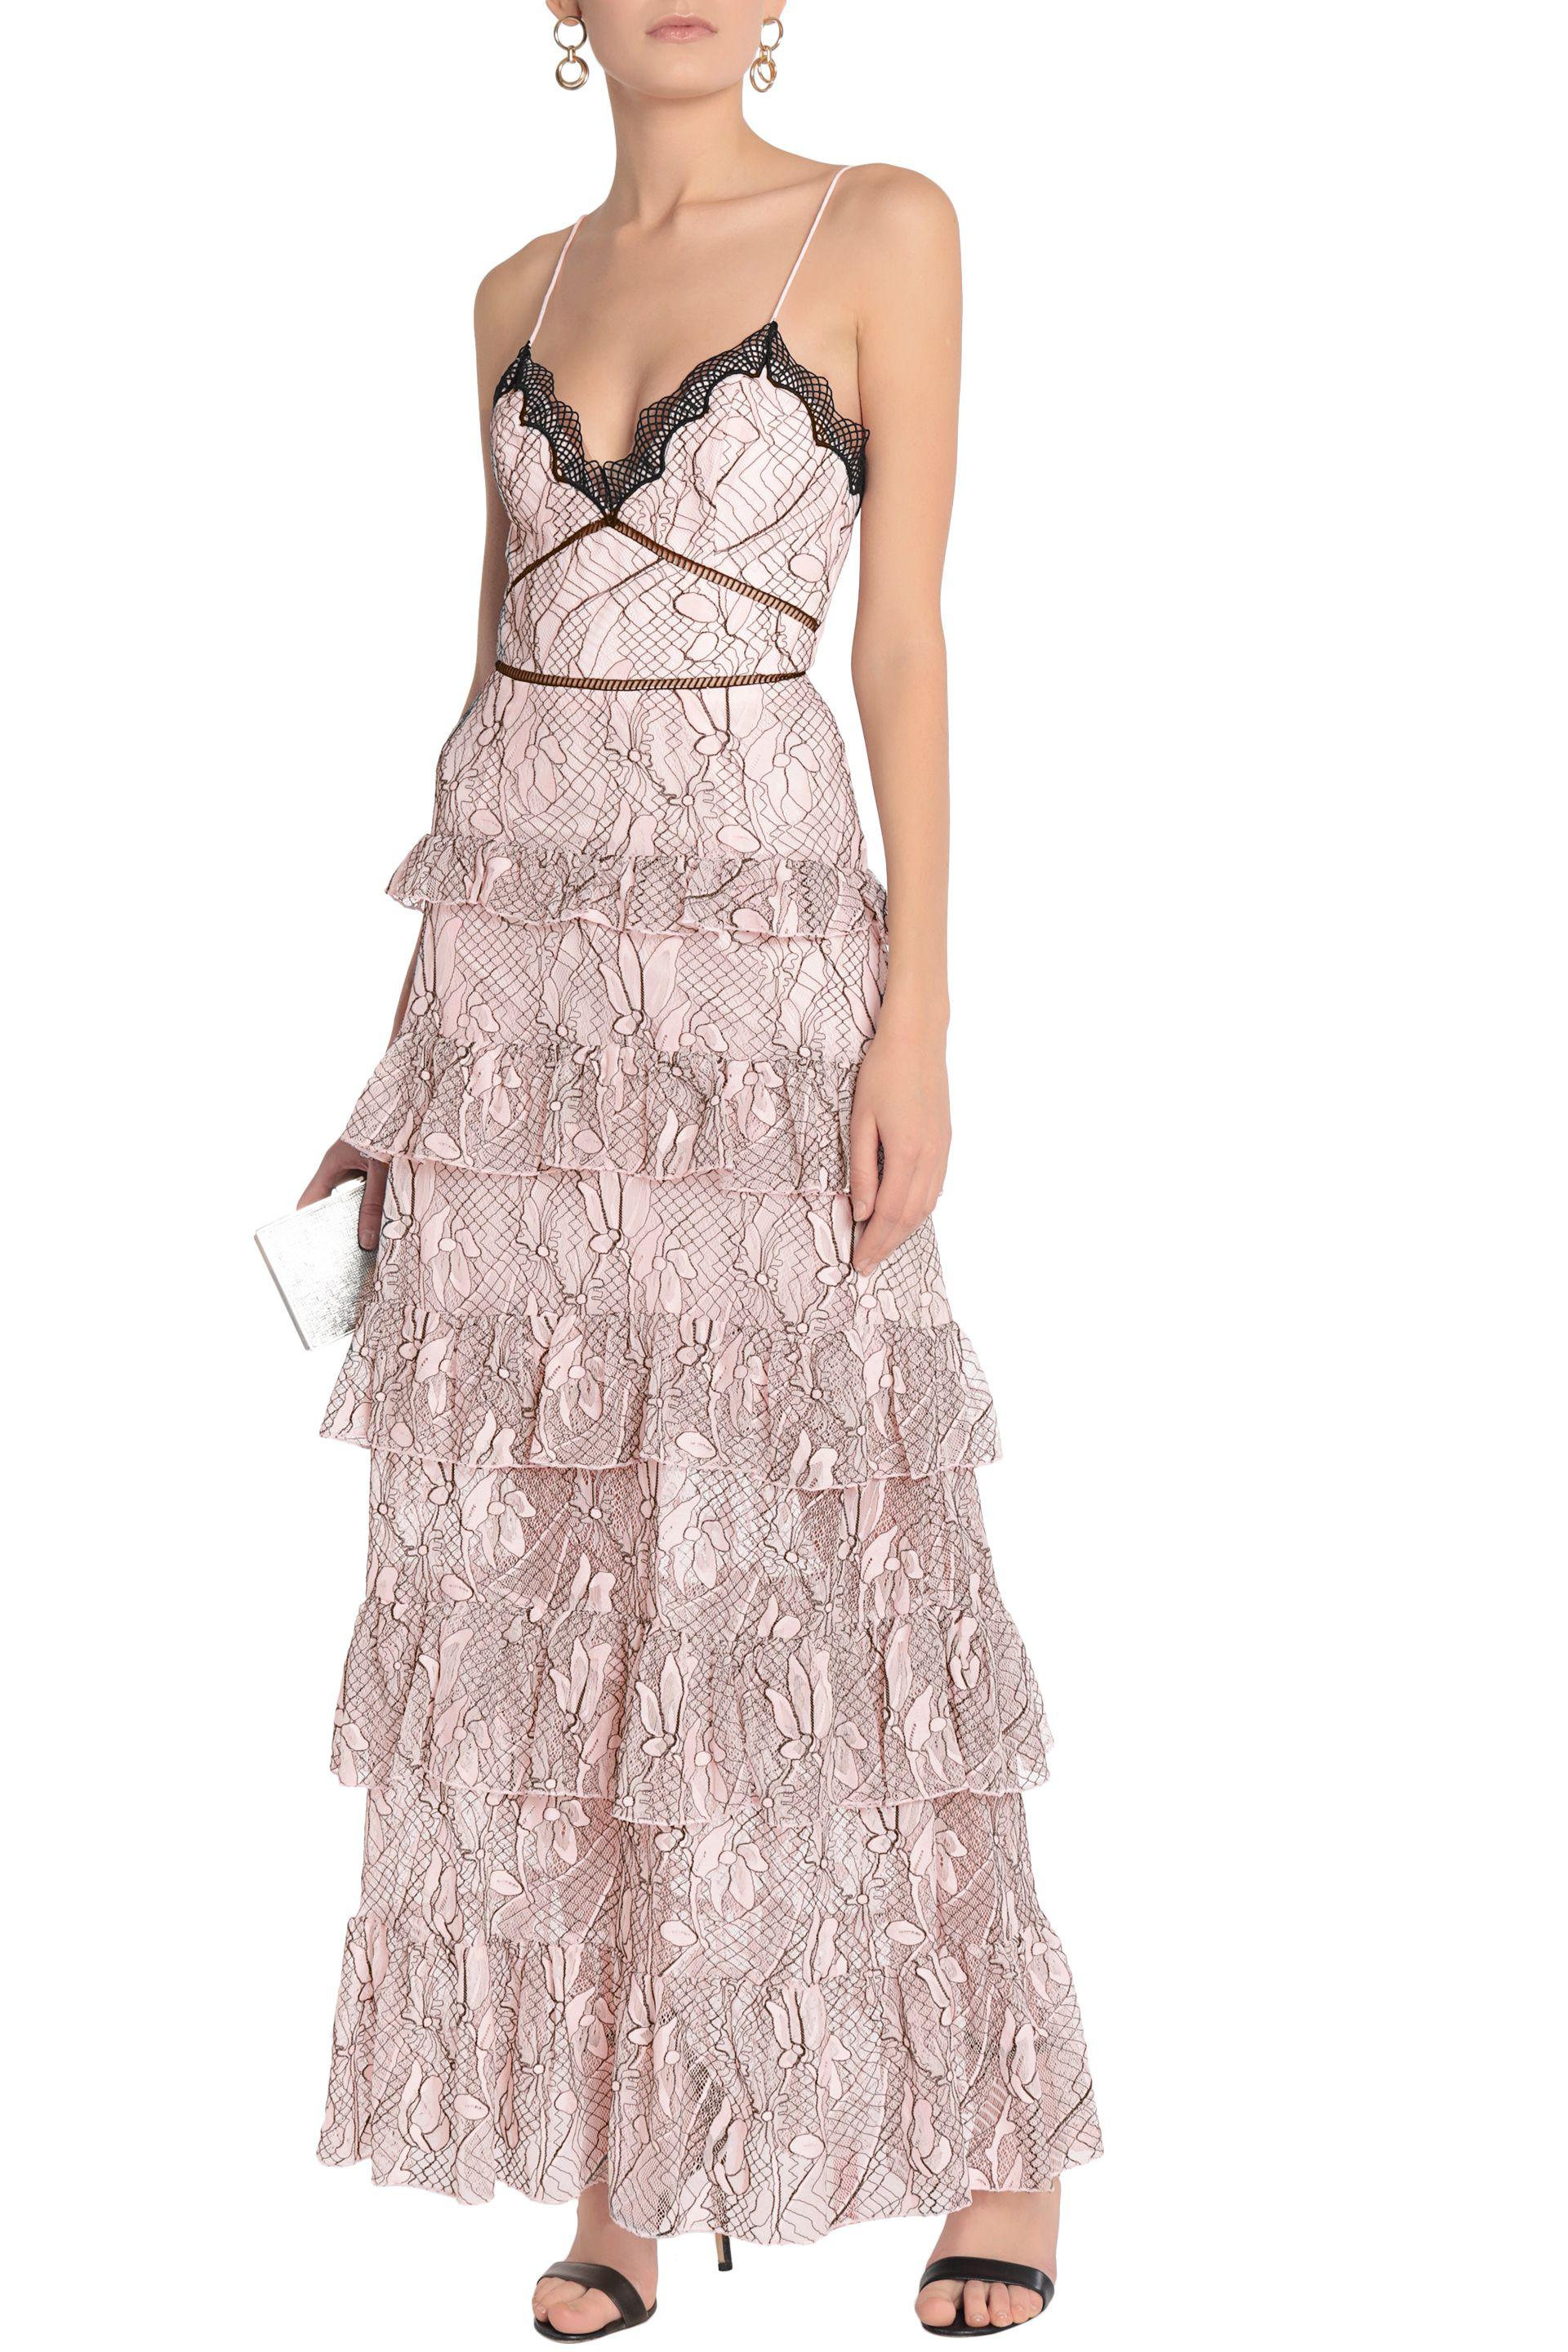 Nicholas Iris Lace Gown in Vintage Rose (Pink) - Lyst